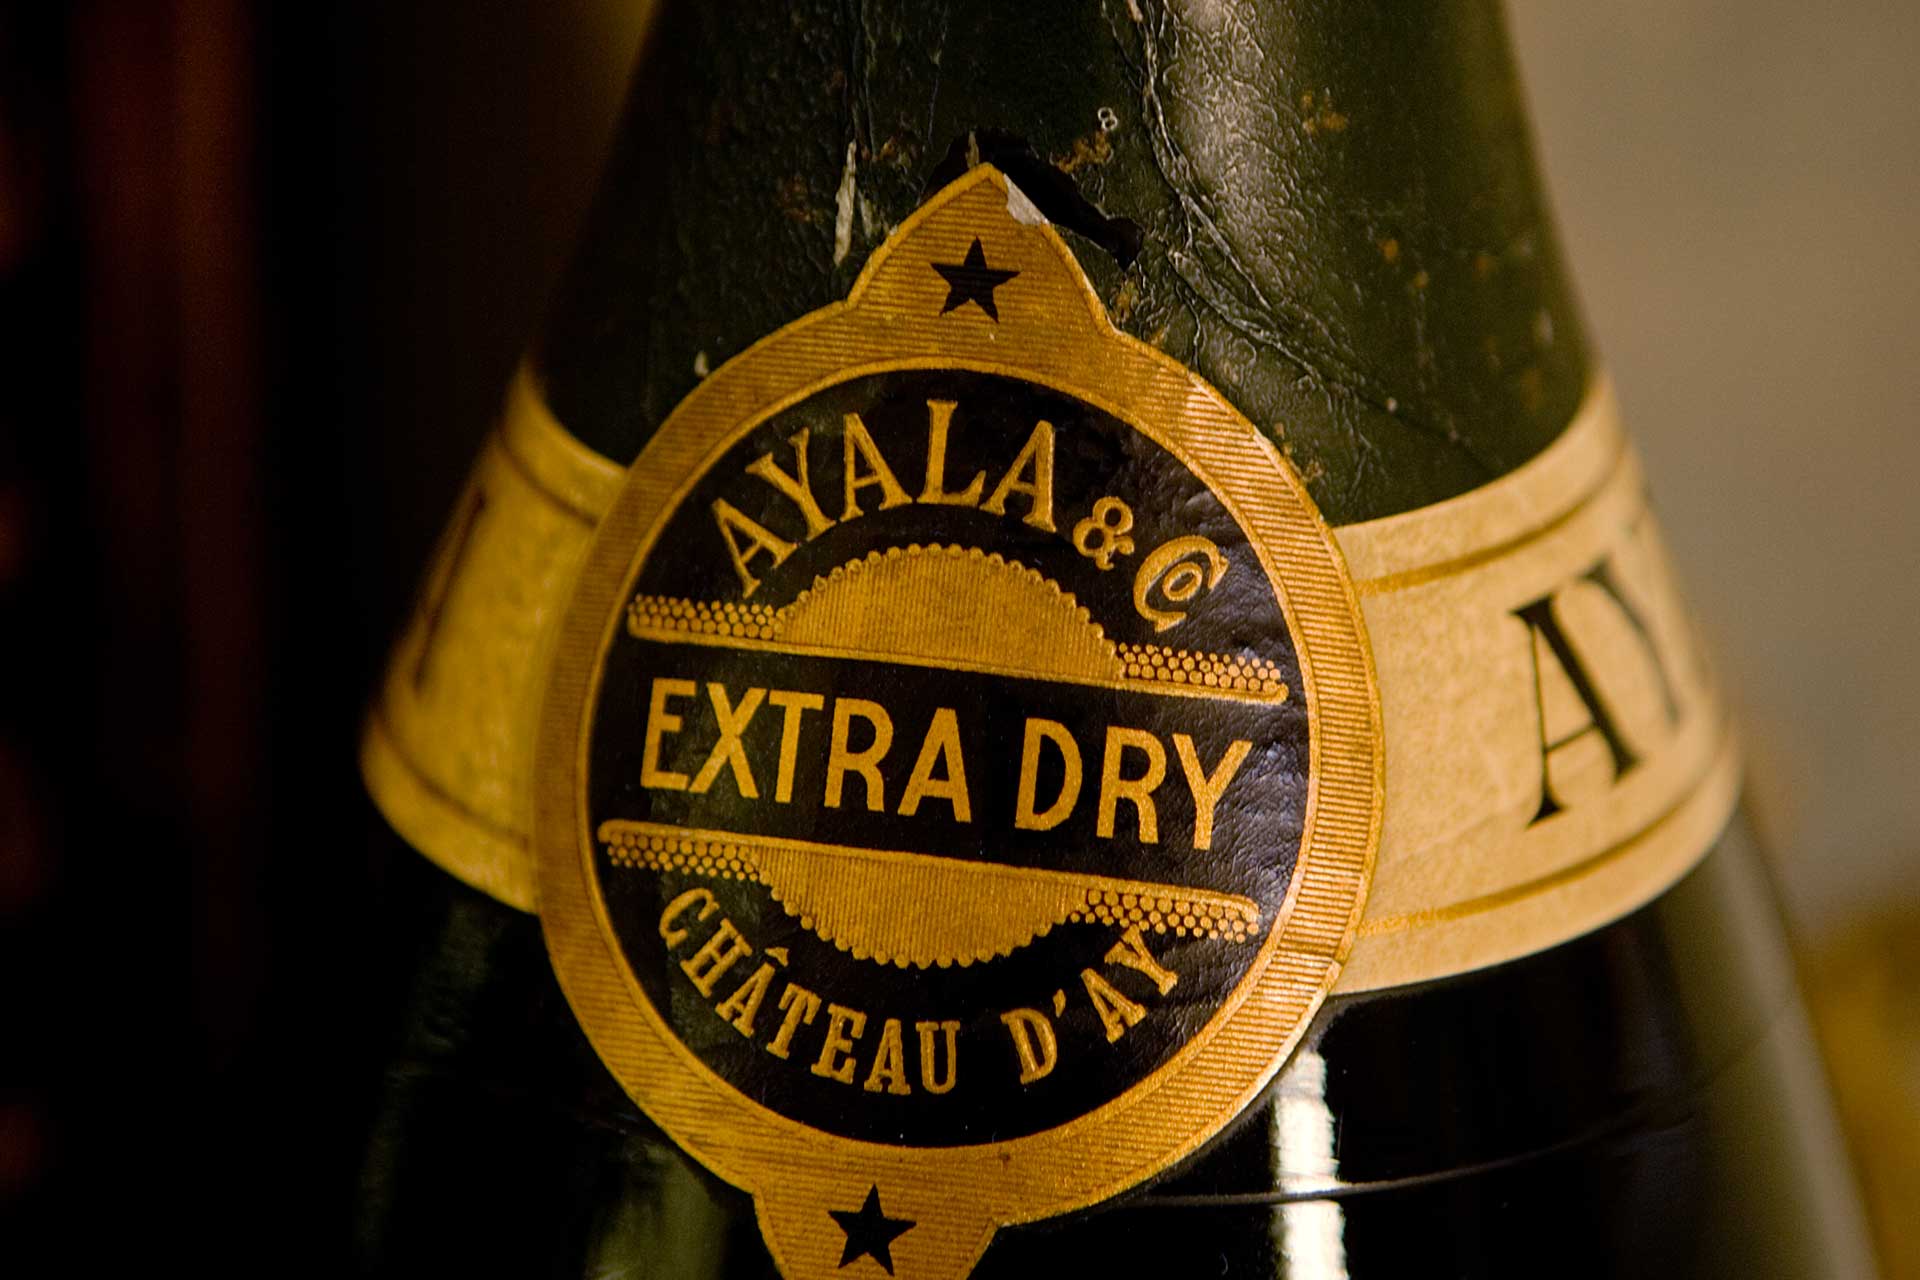 Ayala香槟酒历史